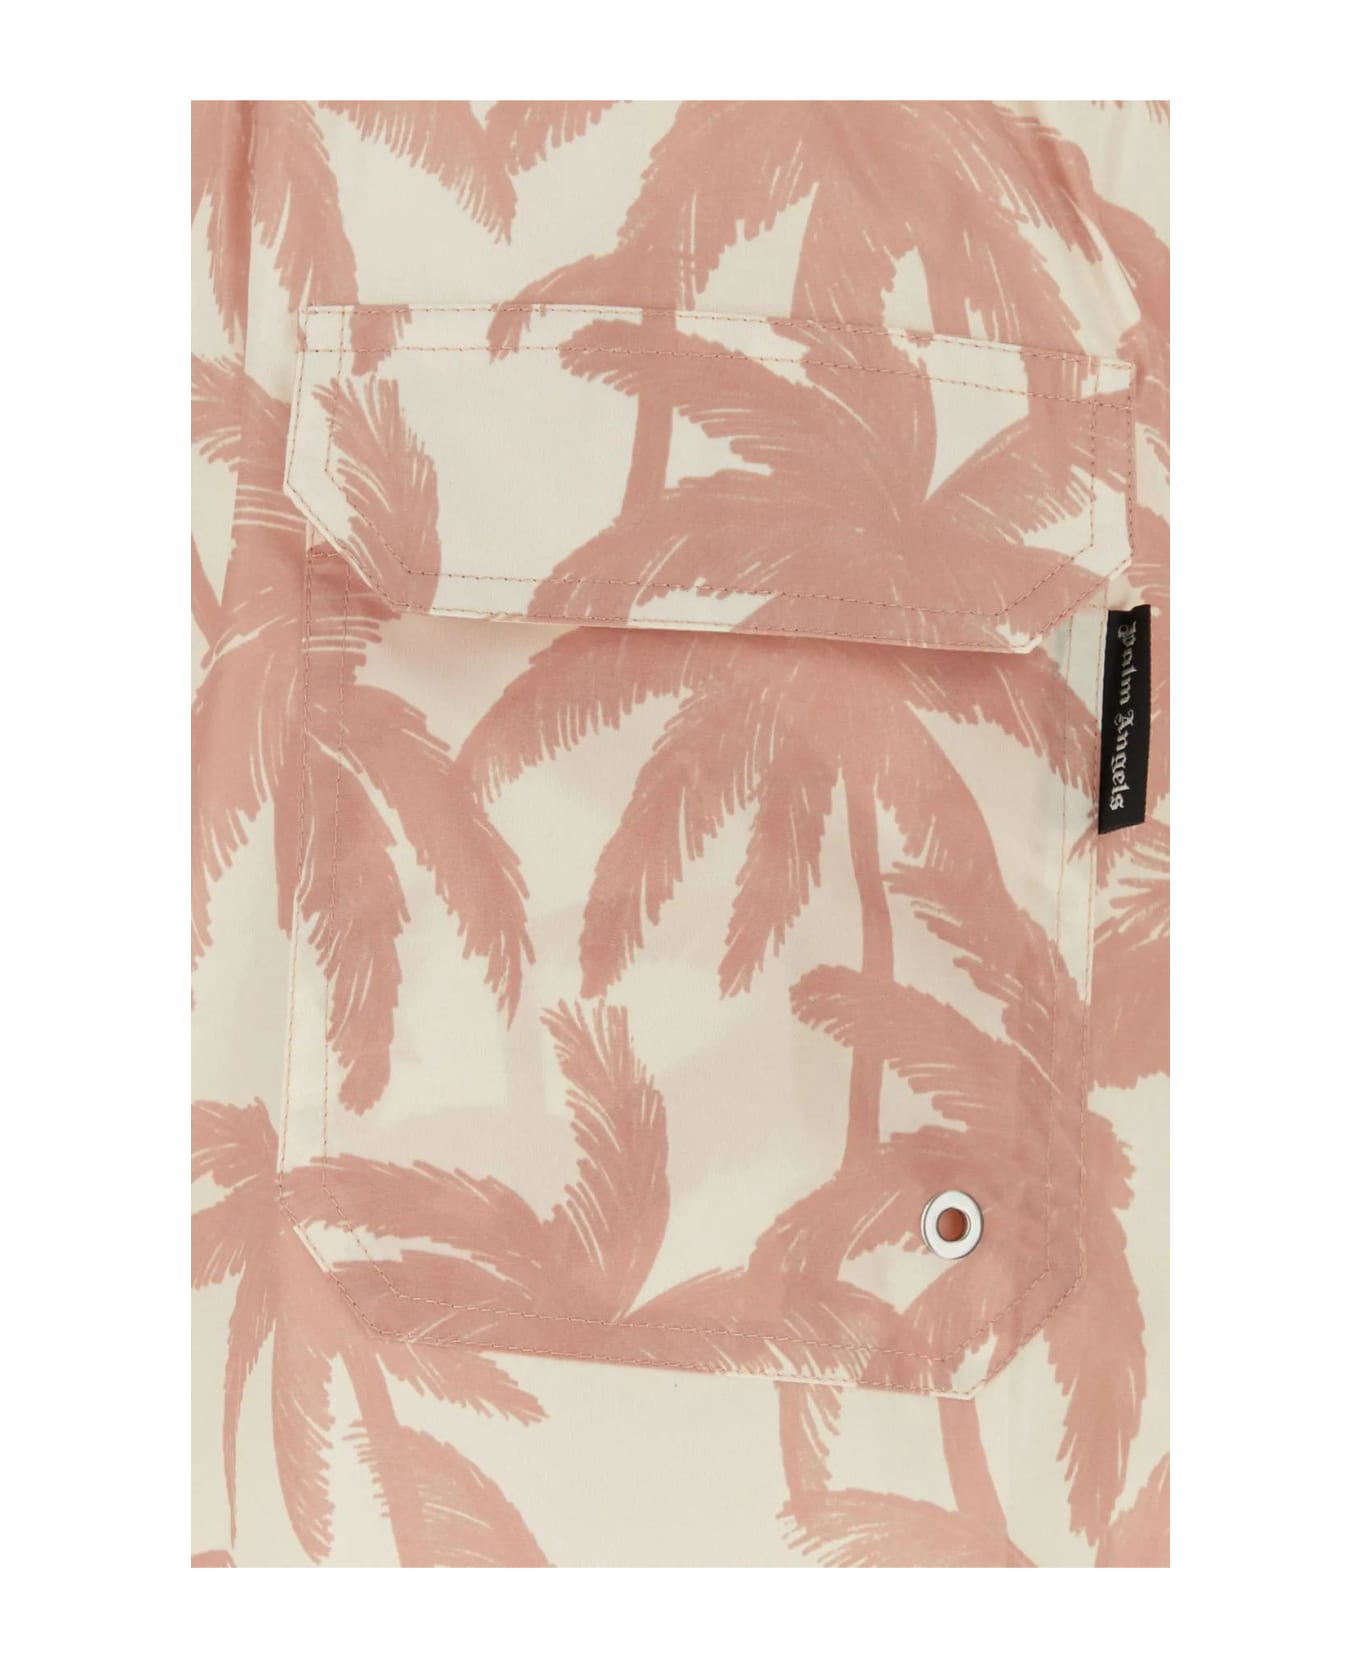 Palm Angels Printed Polyester Swimming Shorts - Bianco rosa ショートパンツ